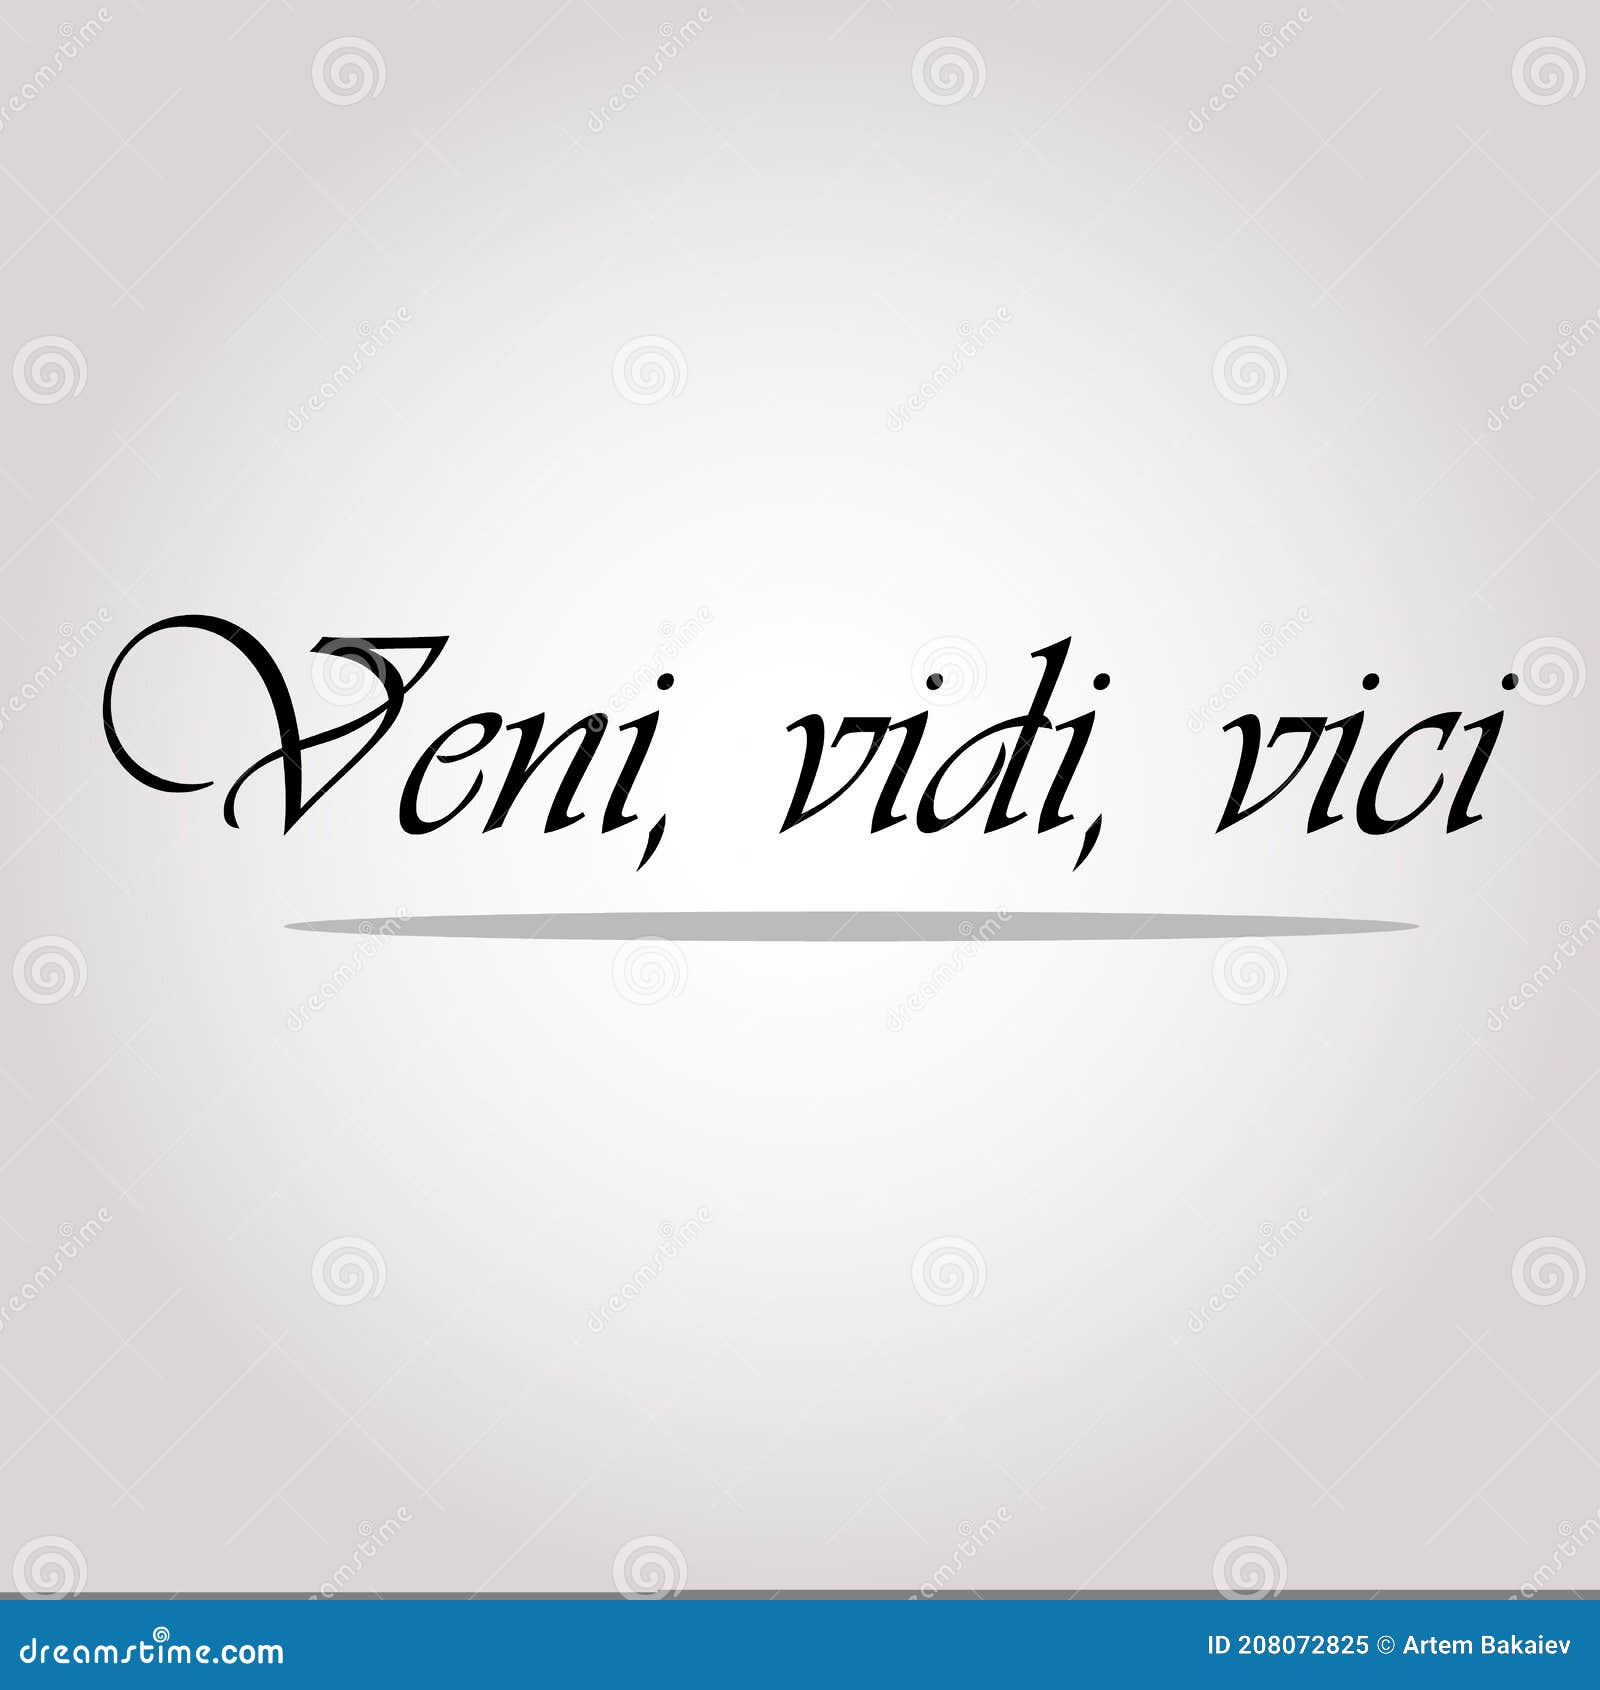 How to Pronounce Veni Vidi Vici? (CORRECTLY) 